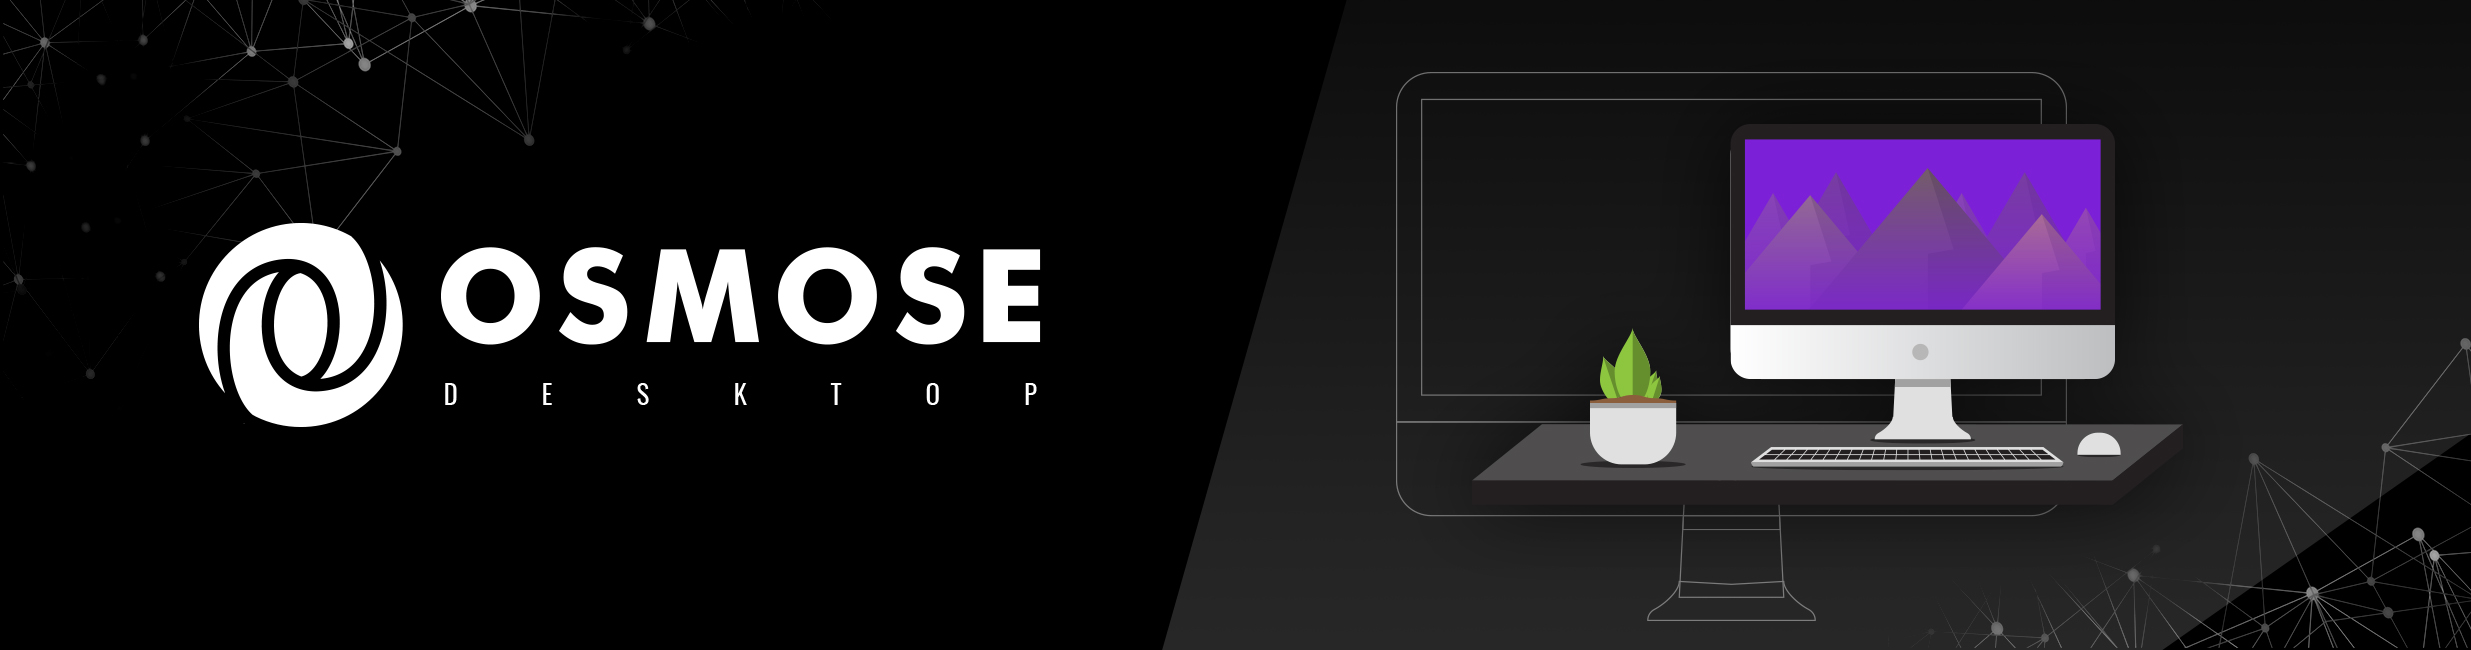 OSMOSE Desktop Wallet